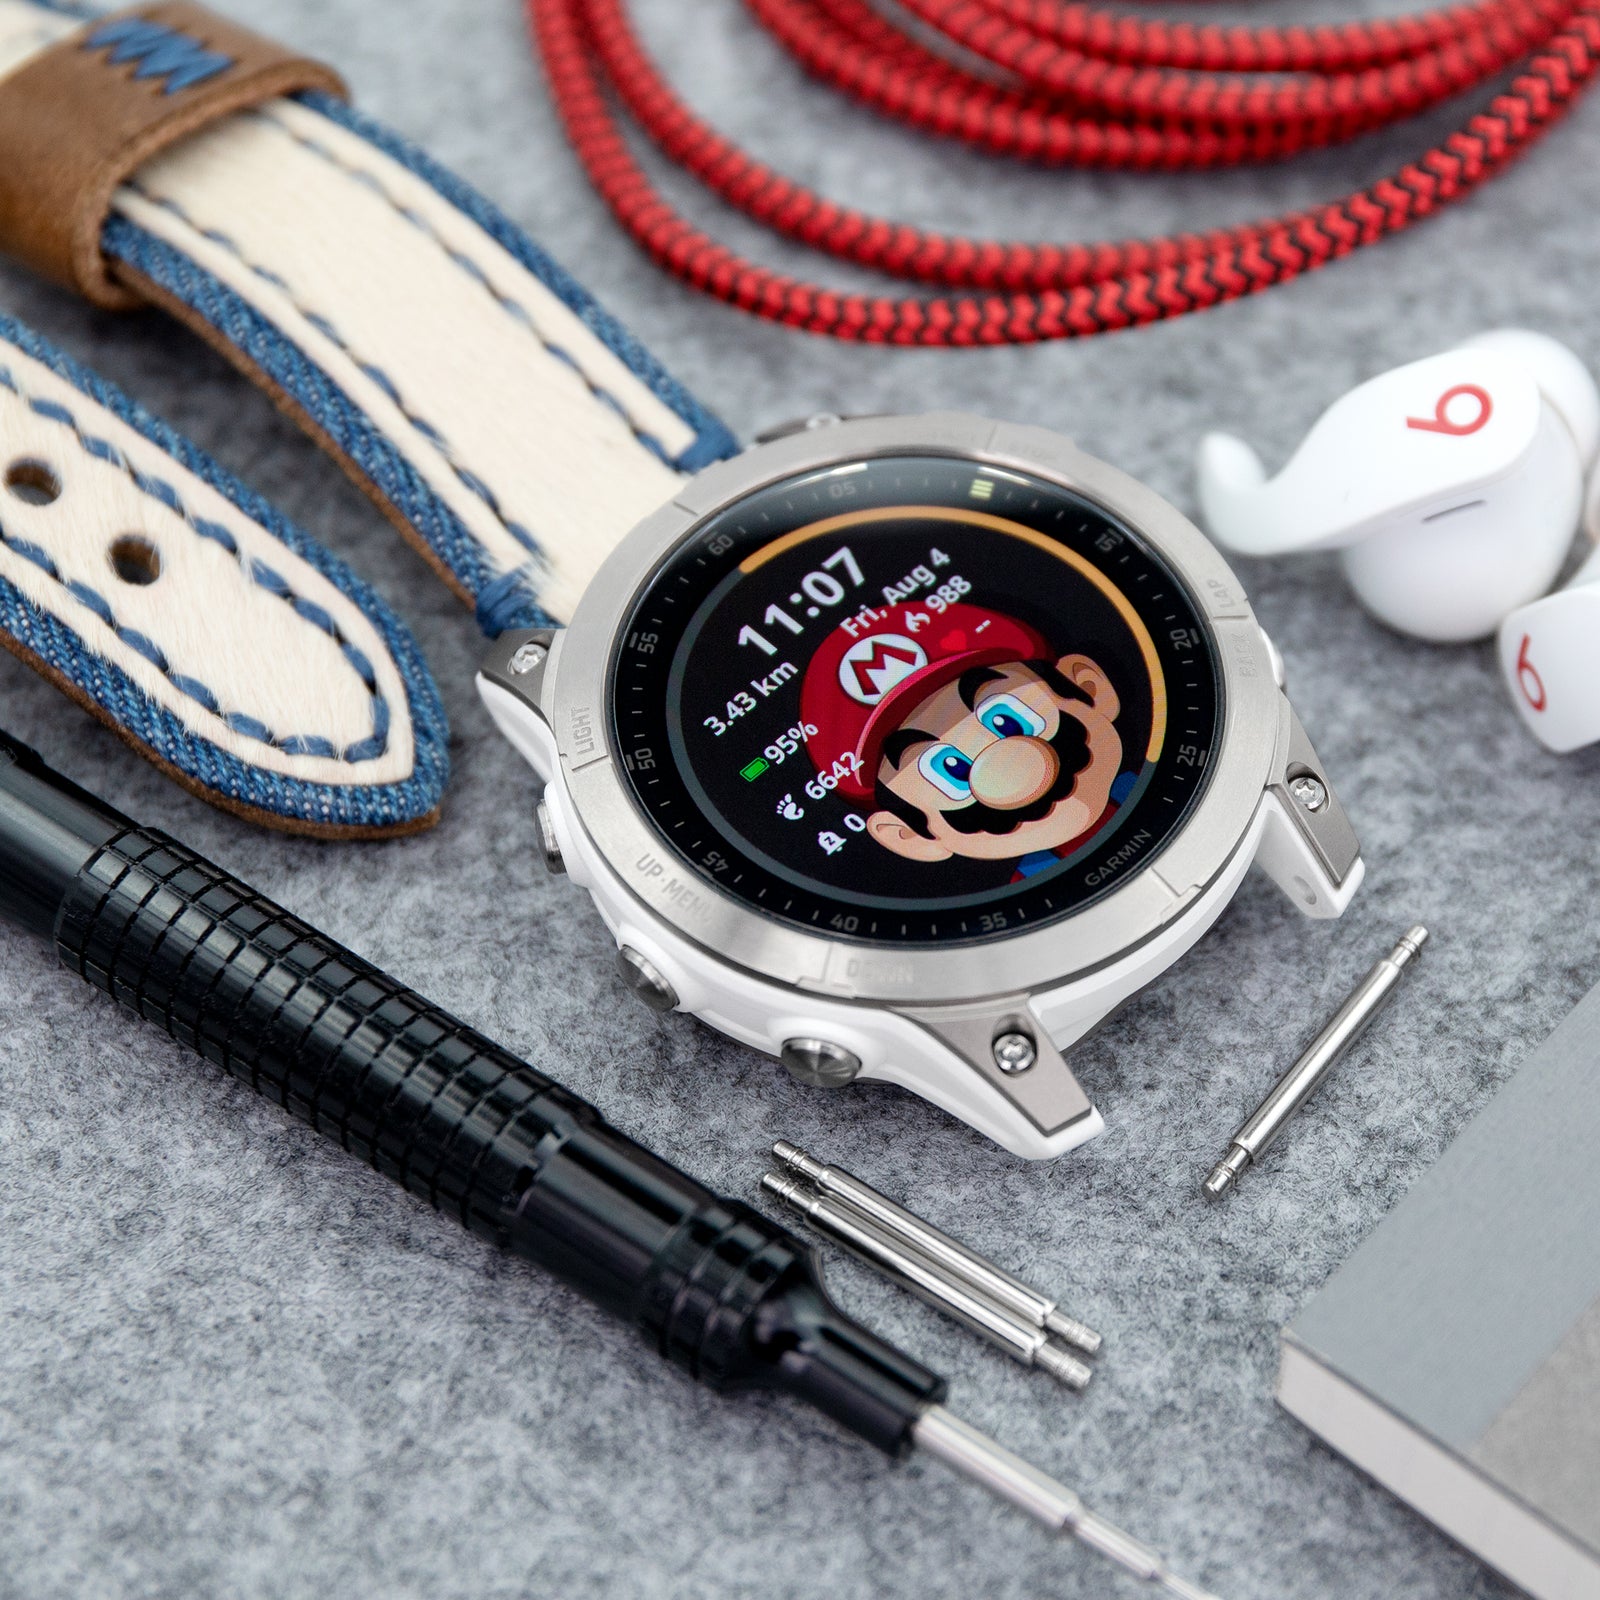 Watch Review: Garmin Epix Gen 2 Pro Higher-End Fitness Smartwatch